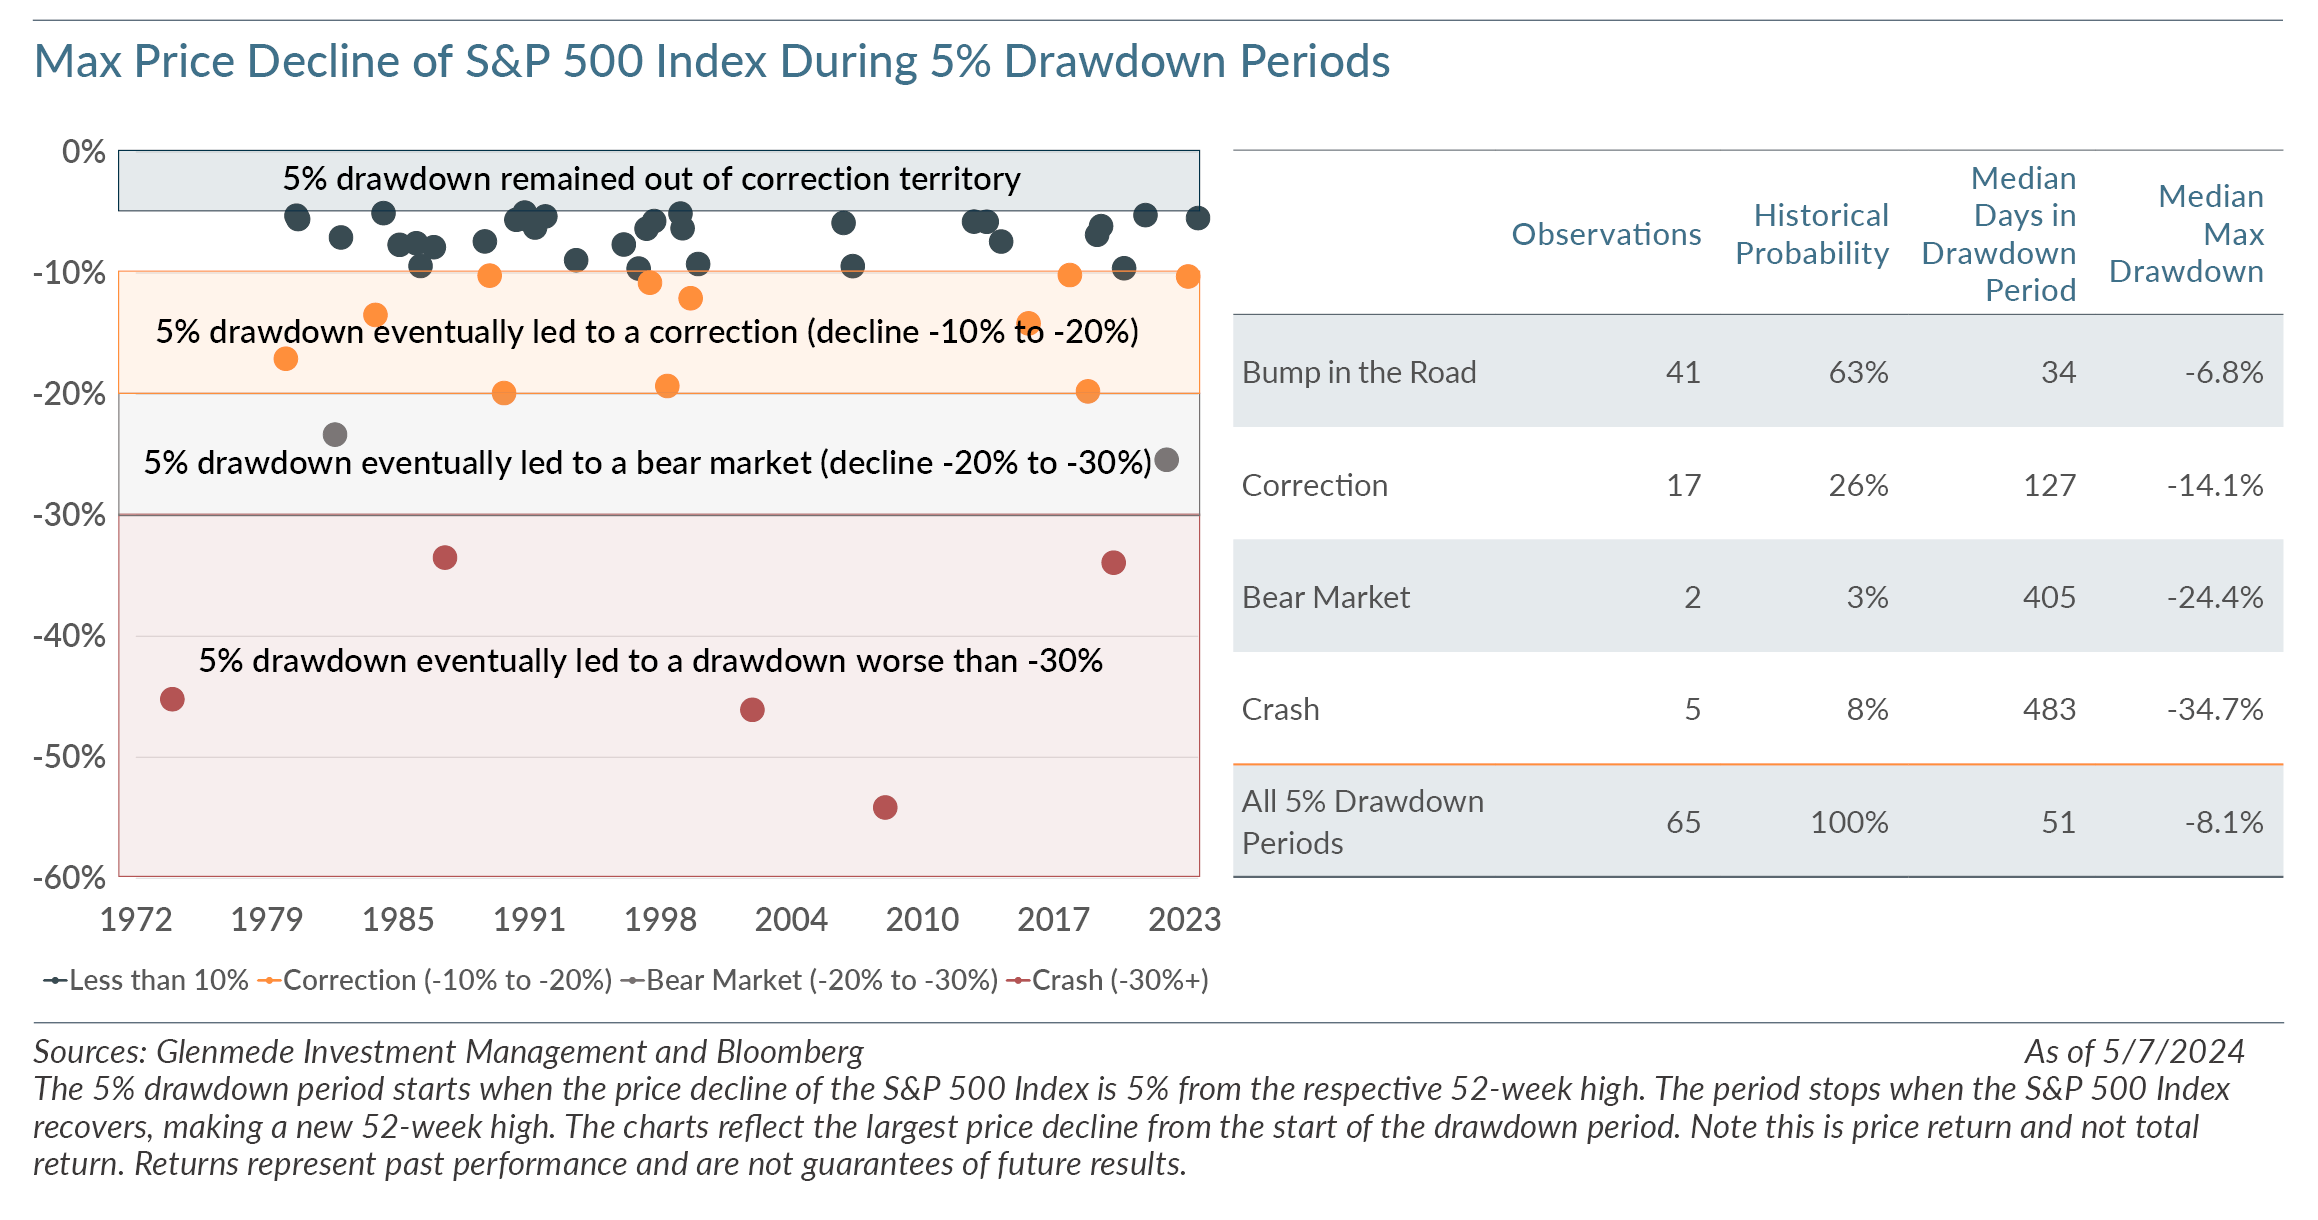 Max Price Decline of S&P 500 Index During 5% Drawdown Periods